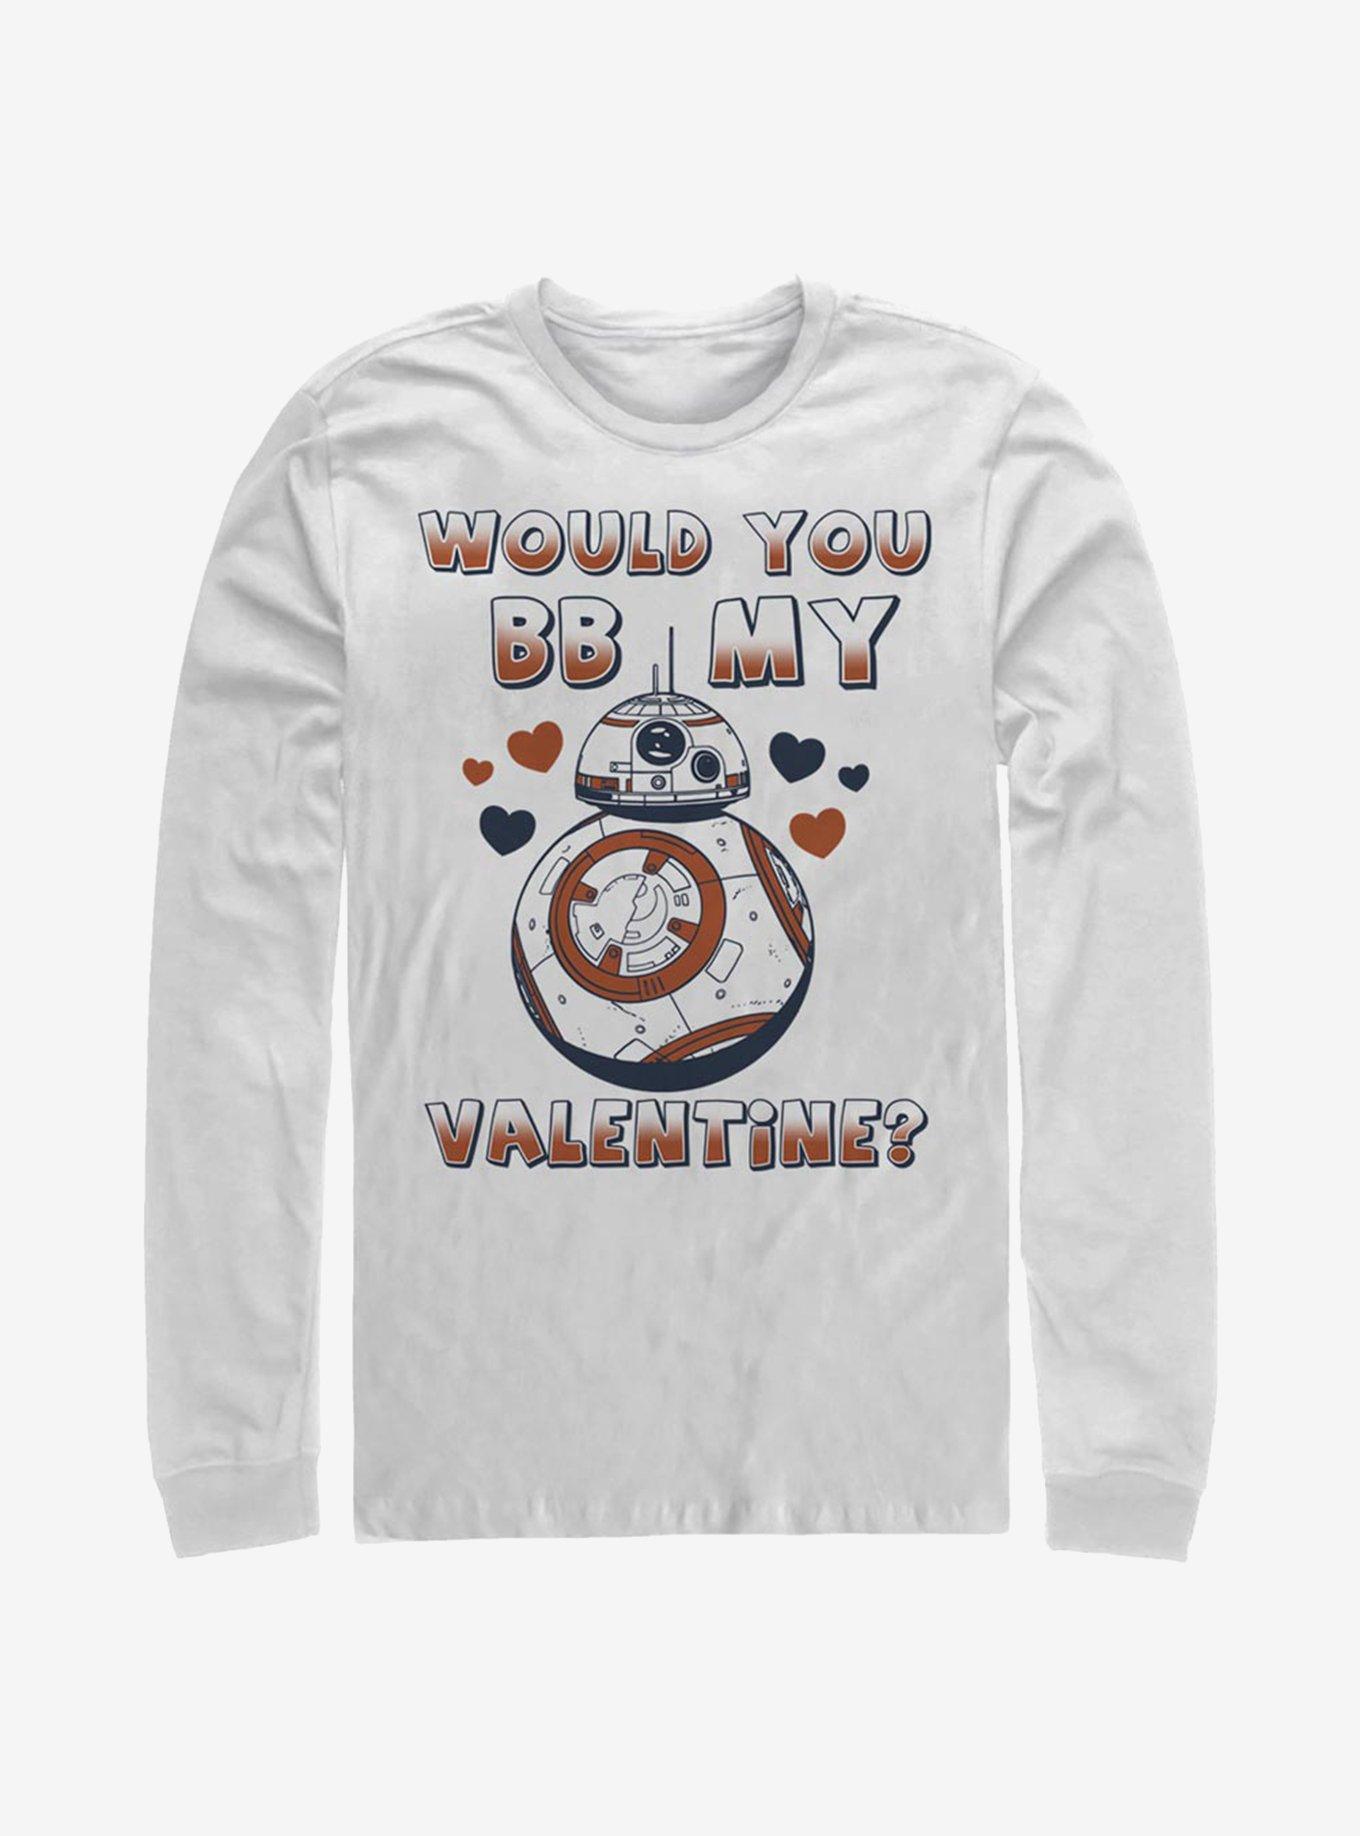 Star Wars: The Force Awakens BB-8 My Valentine Long-Sleeve T-Shirt